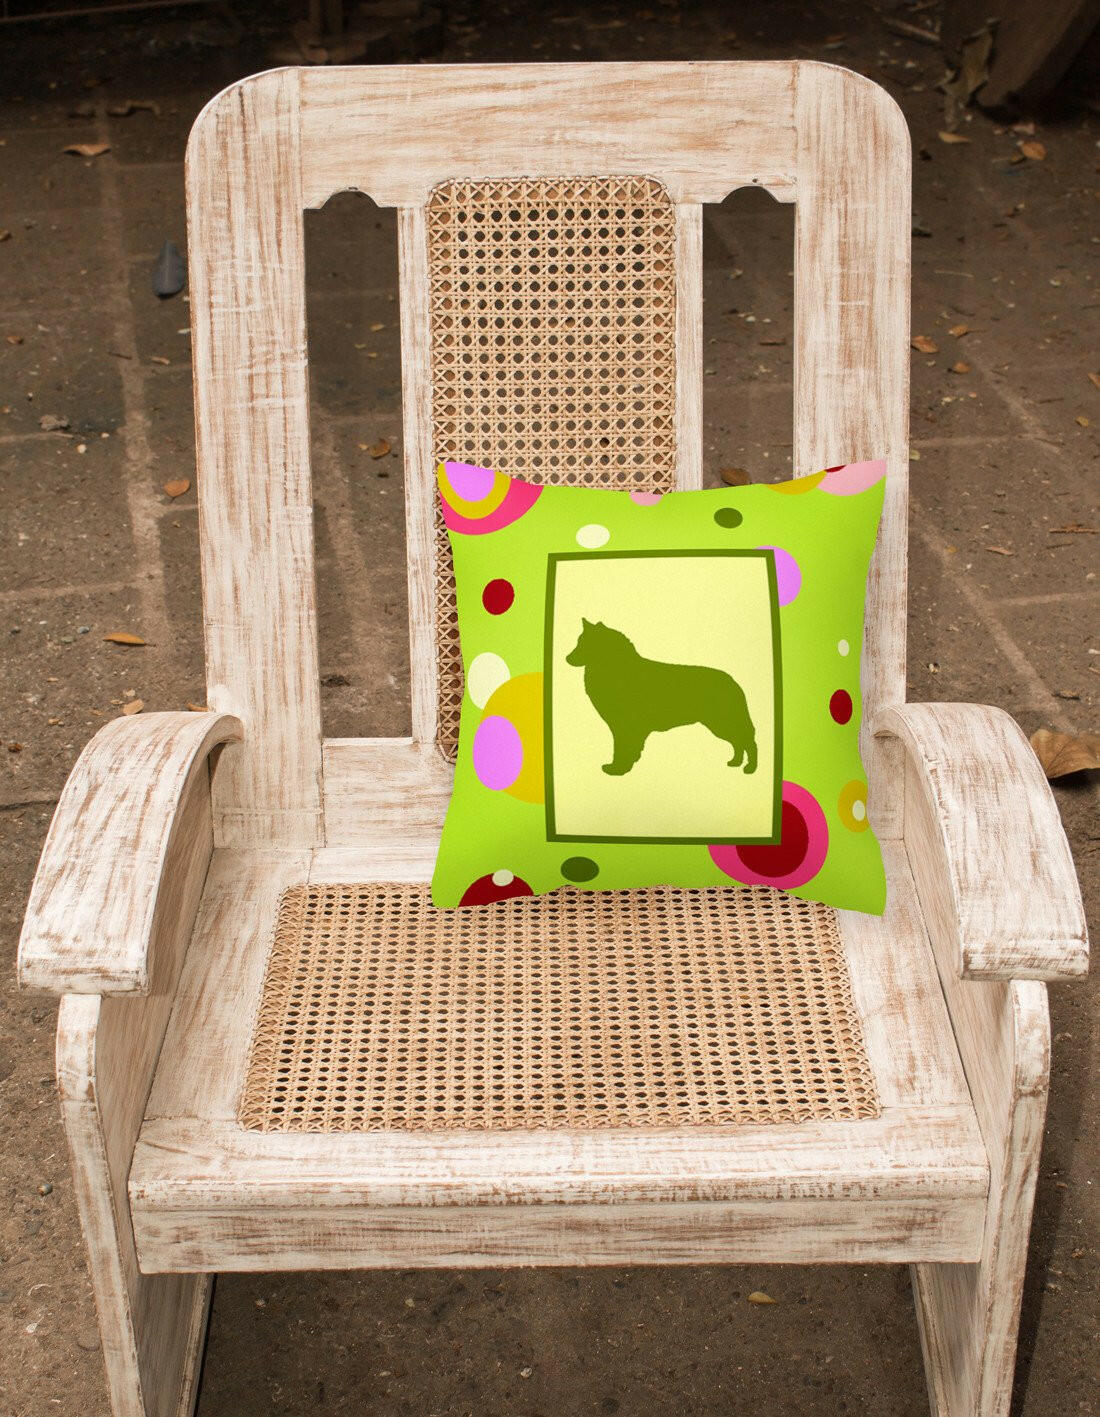 Lime Green Dots Belgian Sheepdog Fabric Decorative Pillow CK1115PW1414 by Caroline's Treasures